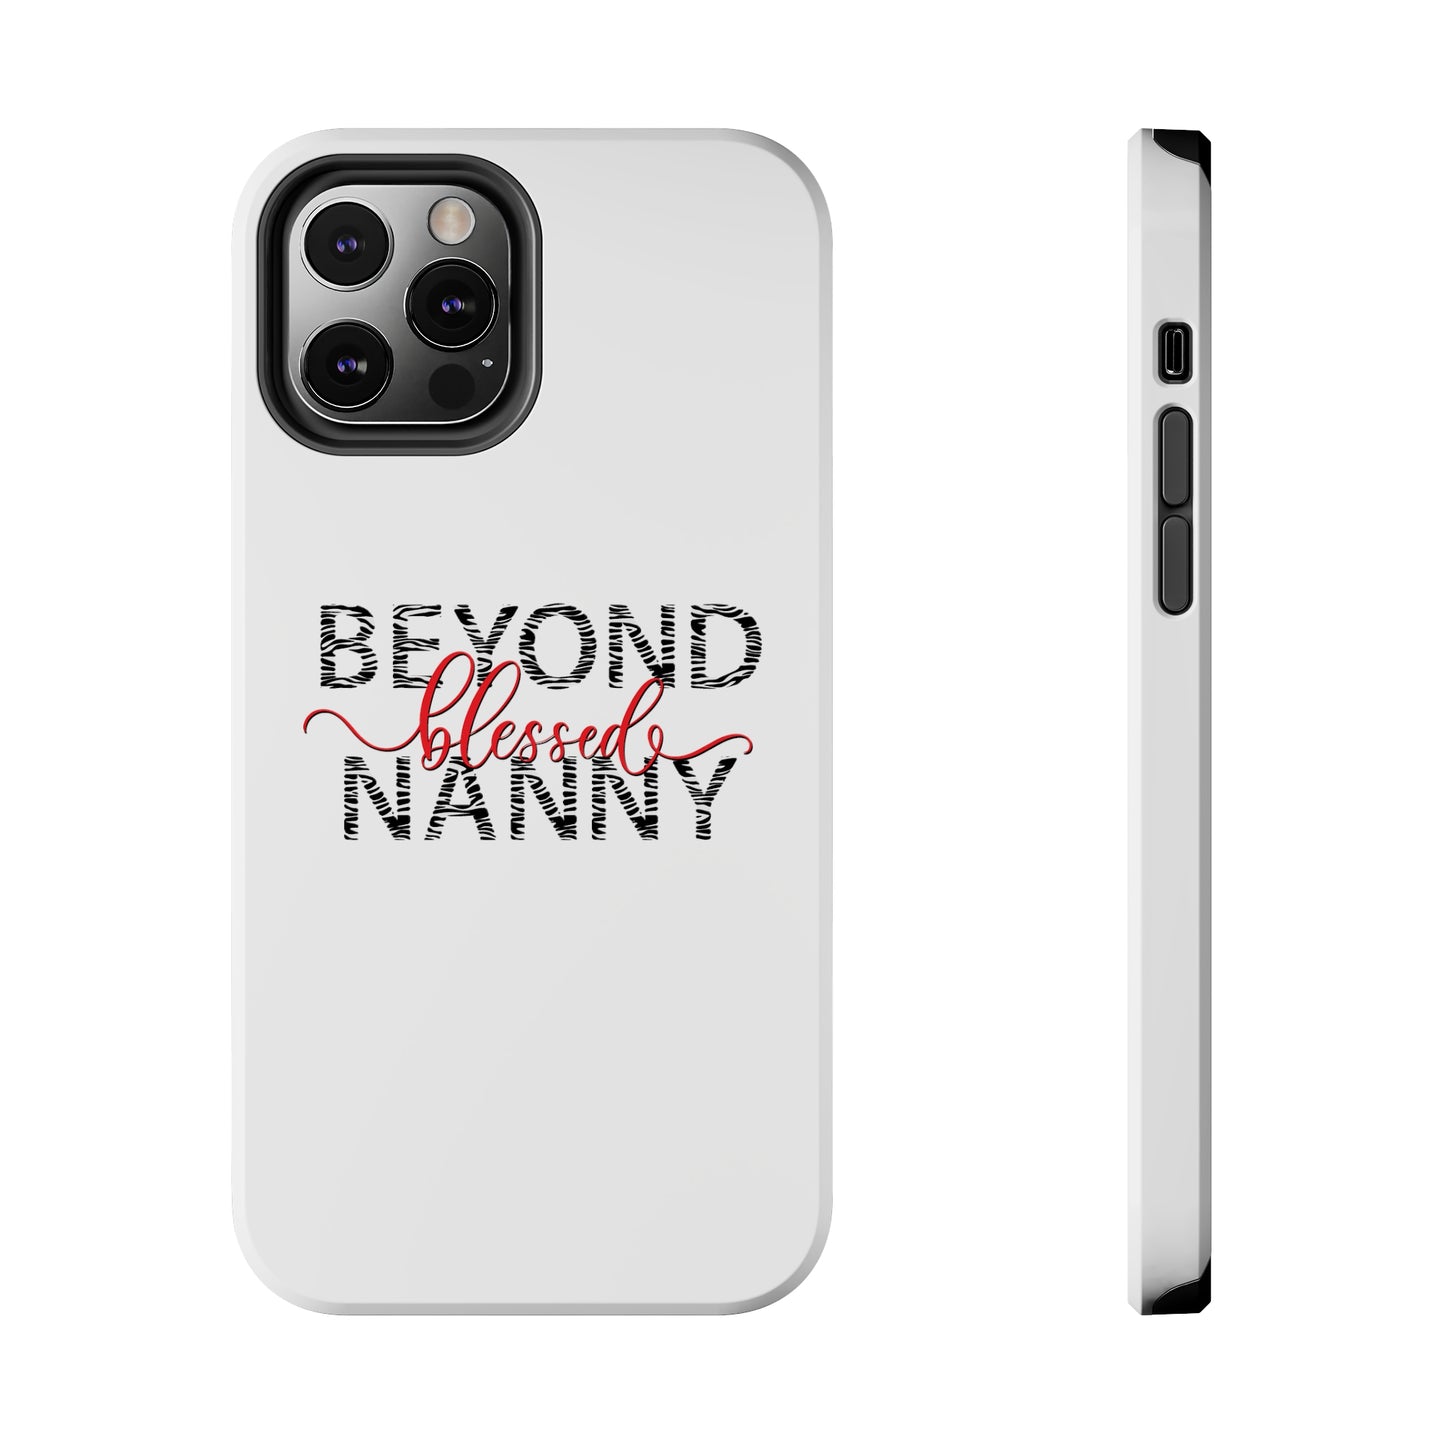 Beyond Blessed Nanny - Zebra Print - Tough Phone Cases